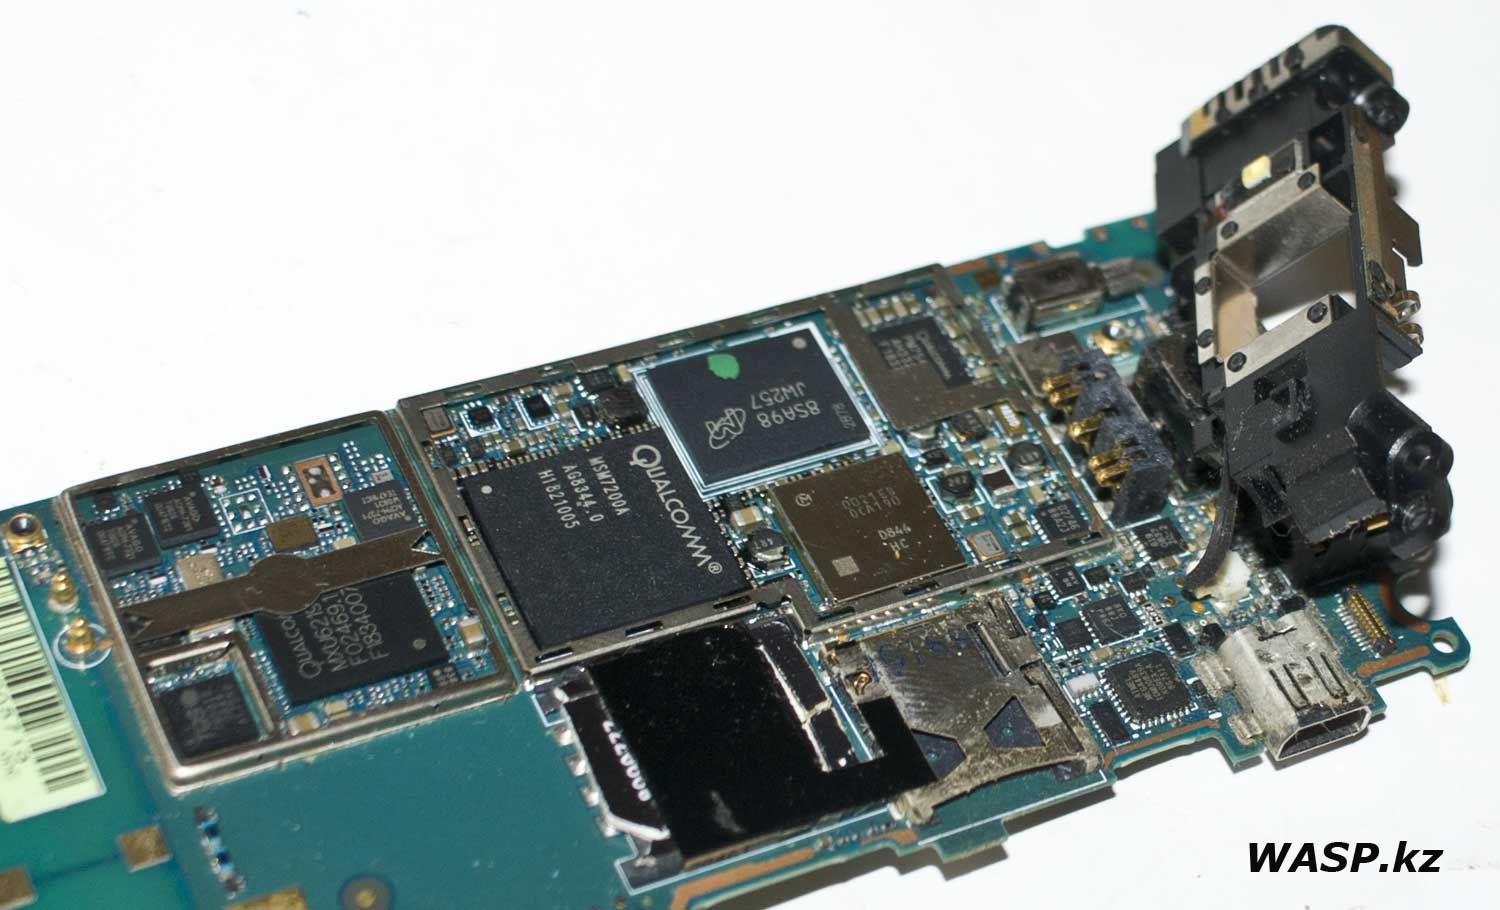 Sony Ericsson Xperia X1 разборка и ремонт, как все сделать?